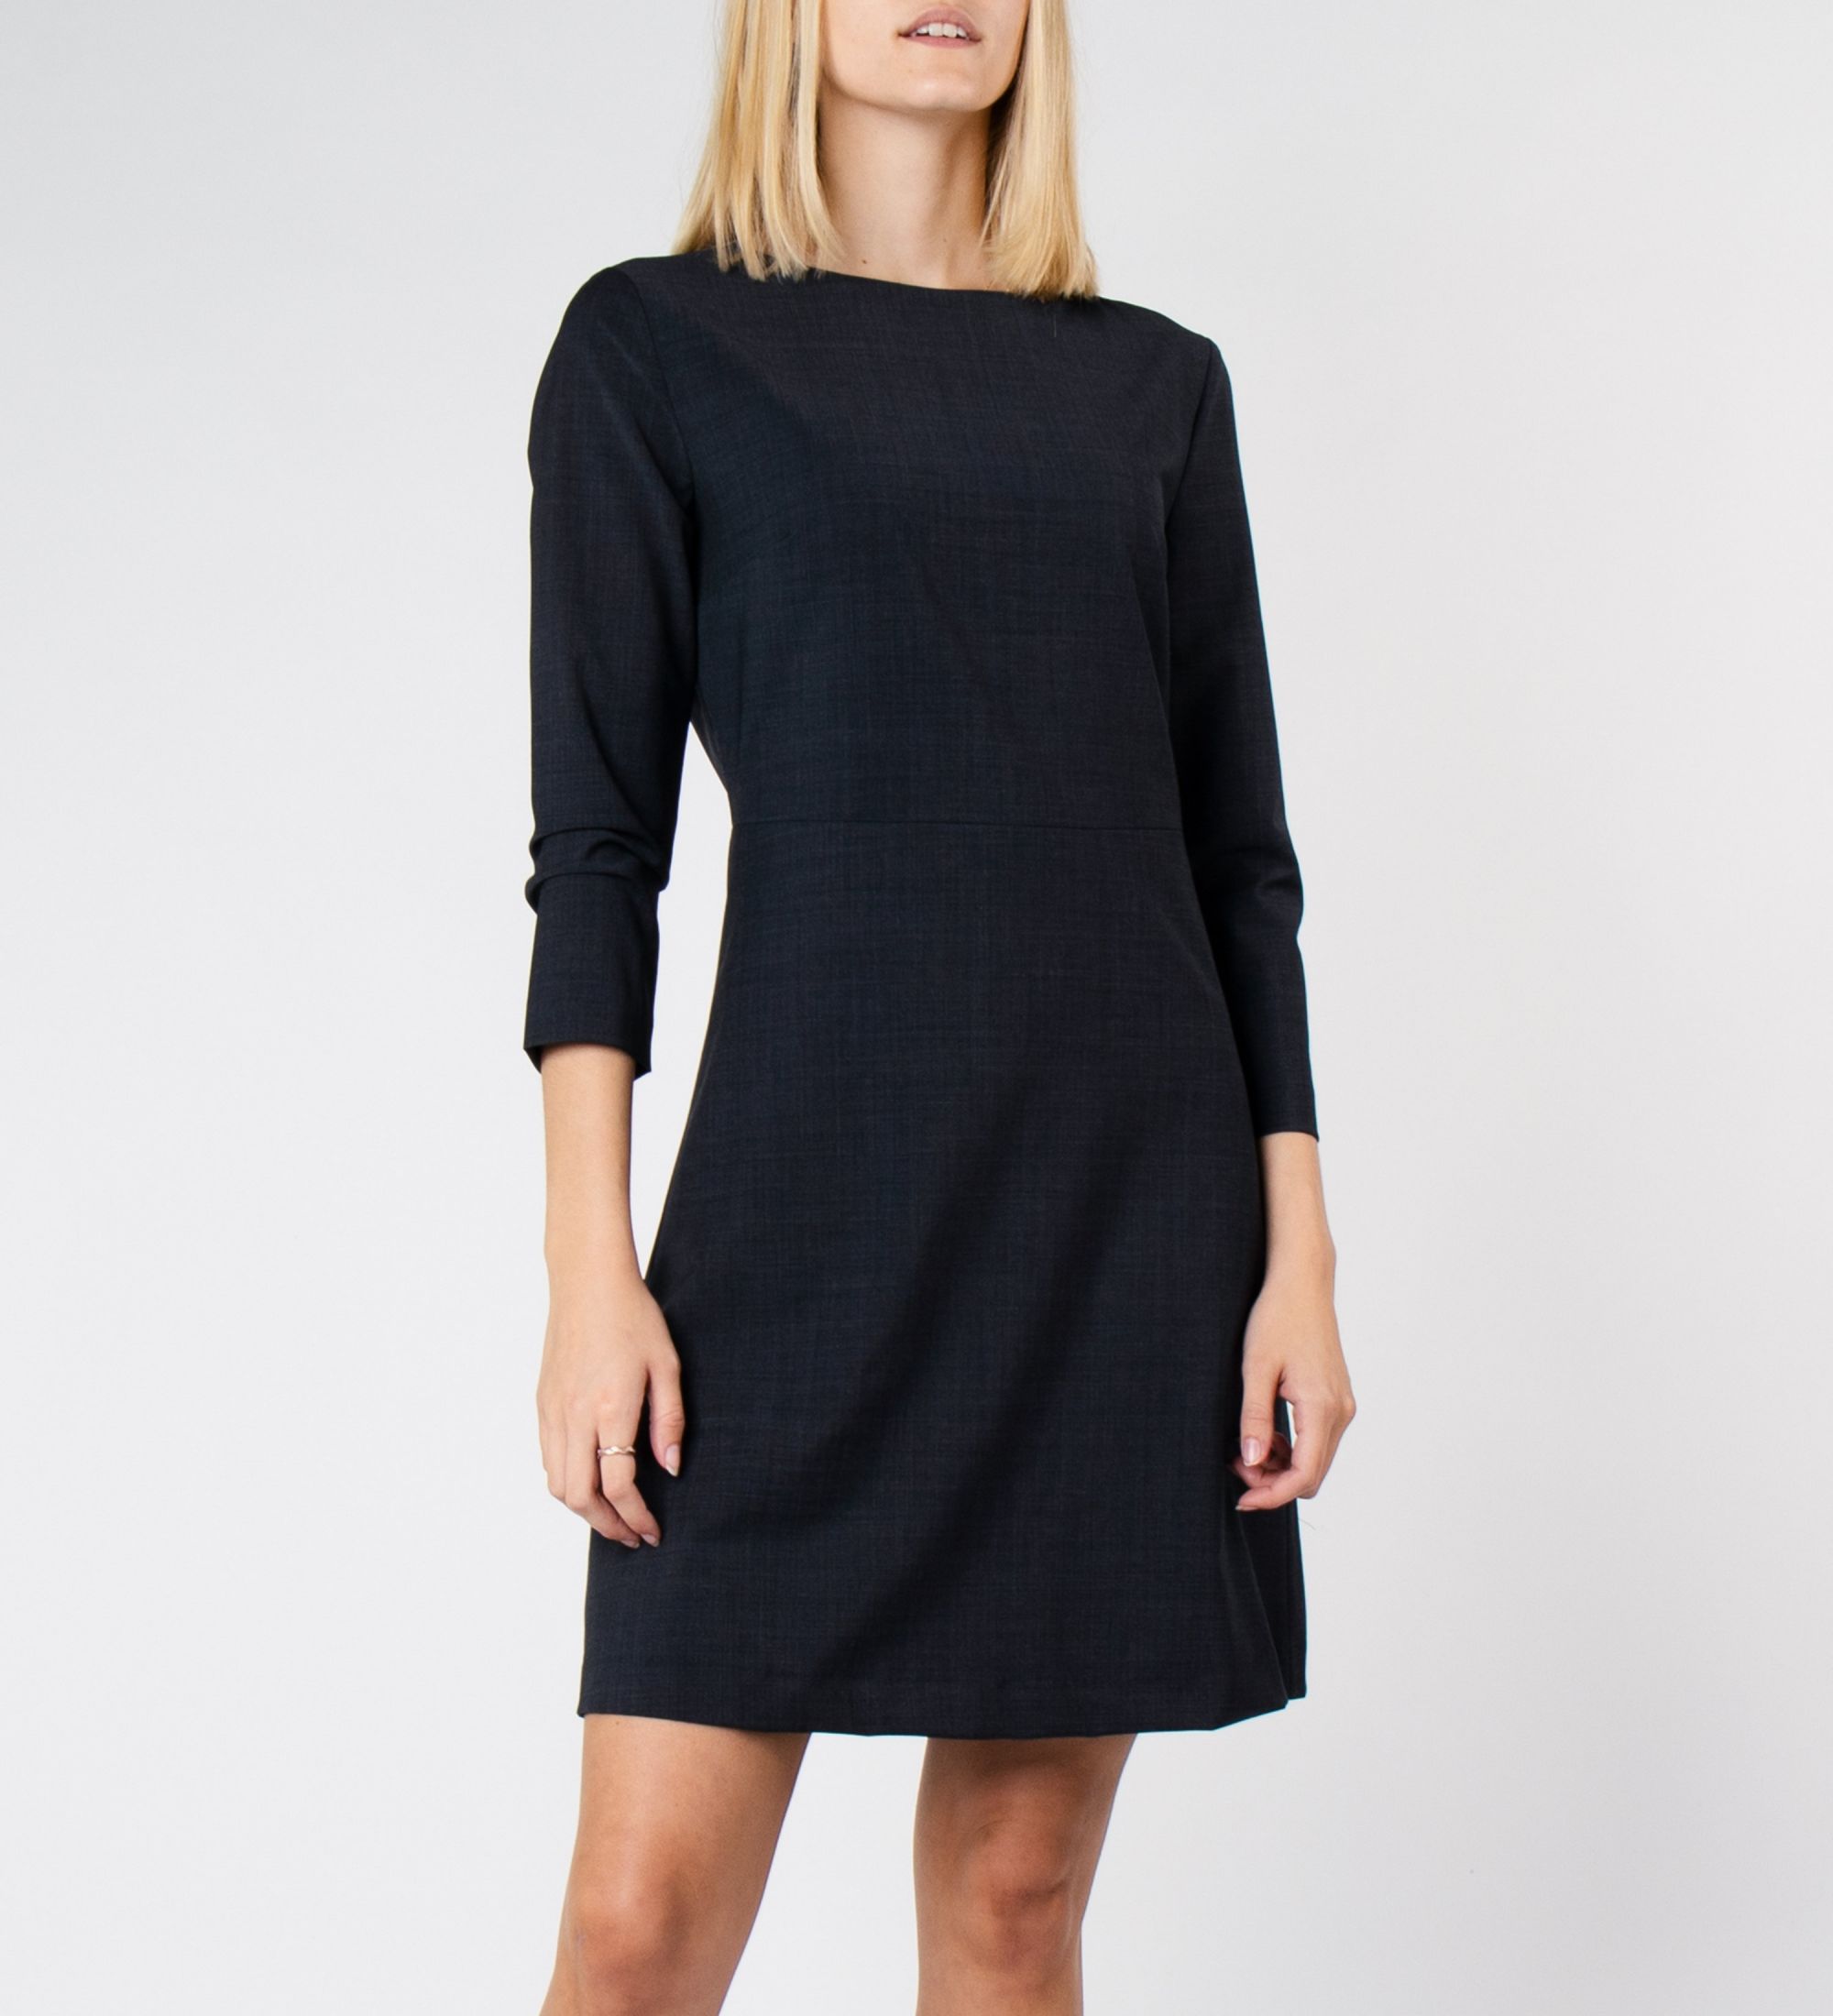 LEEZ Women Mid-thigh Length Wool Dress - Dark Grey